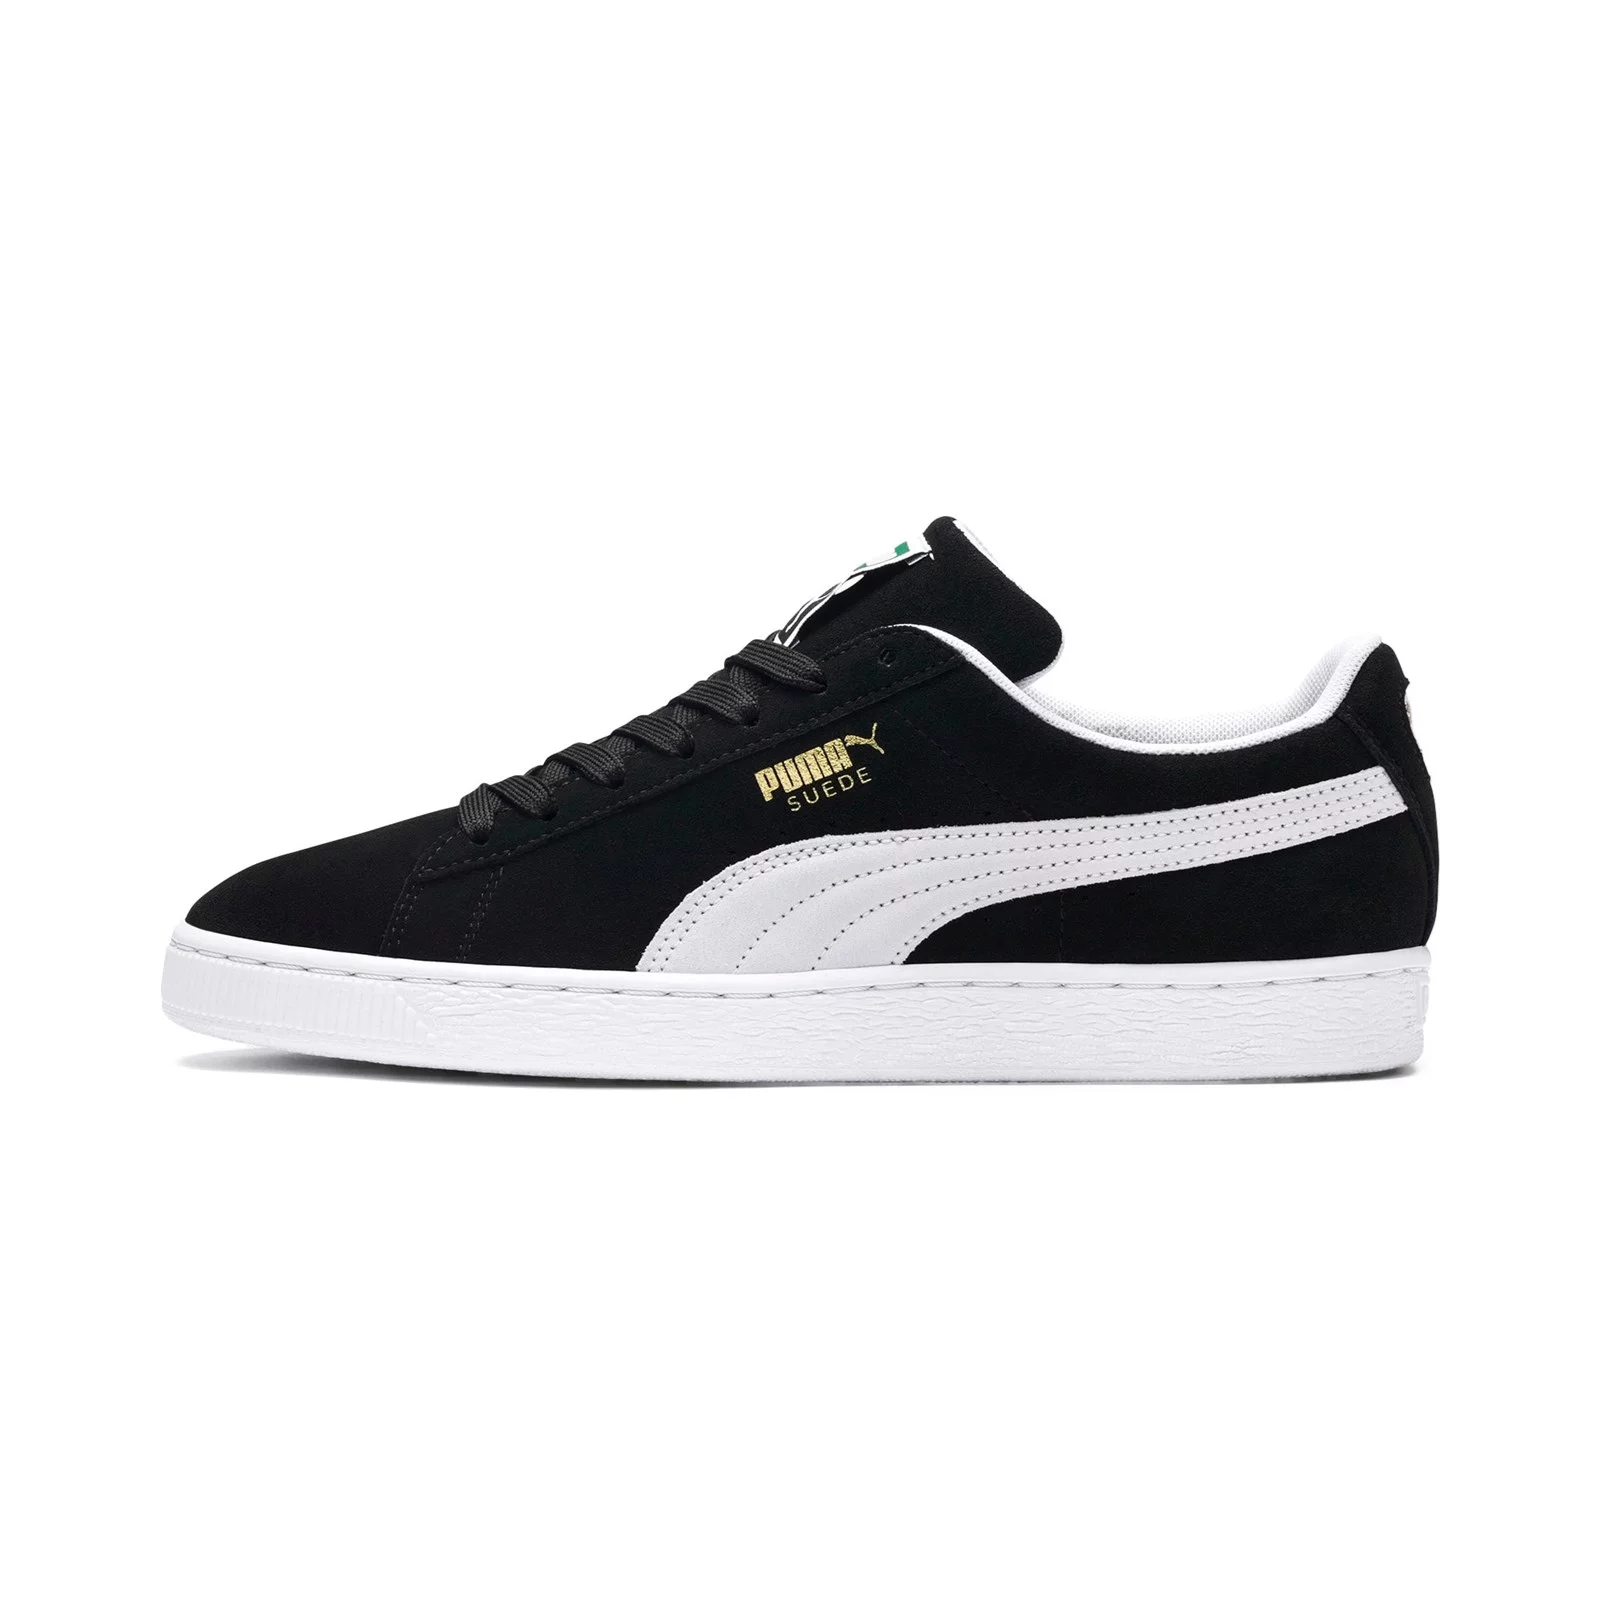 Emphasis top notch Parana River Men's sneakers Puma Suede Classic+ Black-White 352634 03